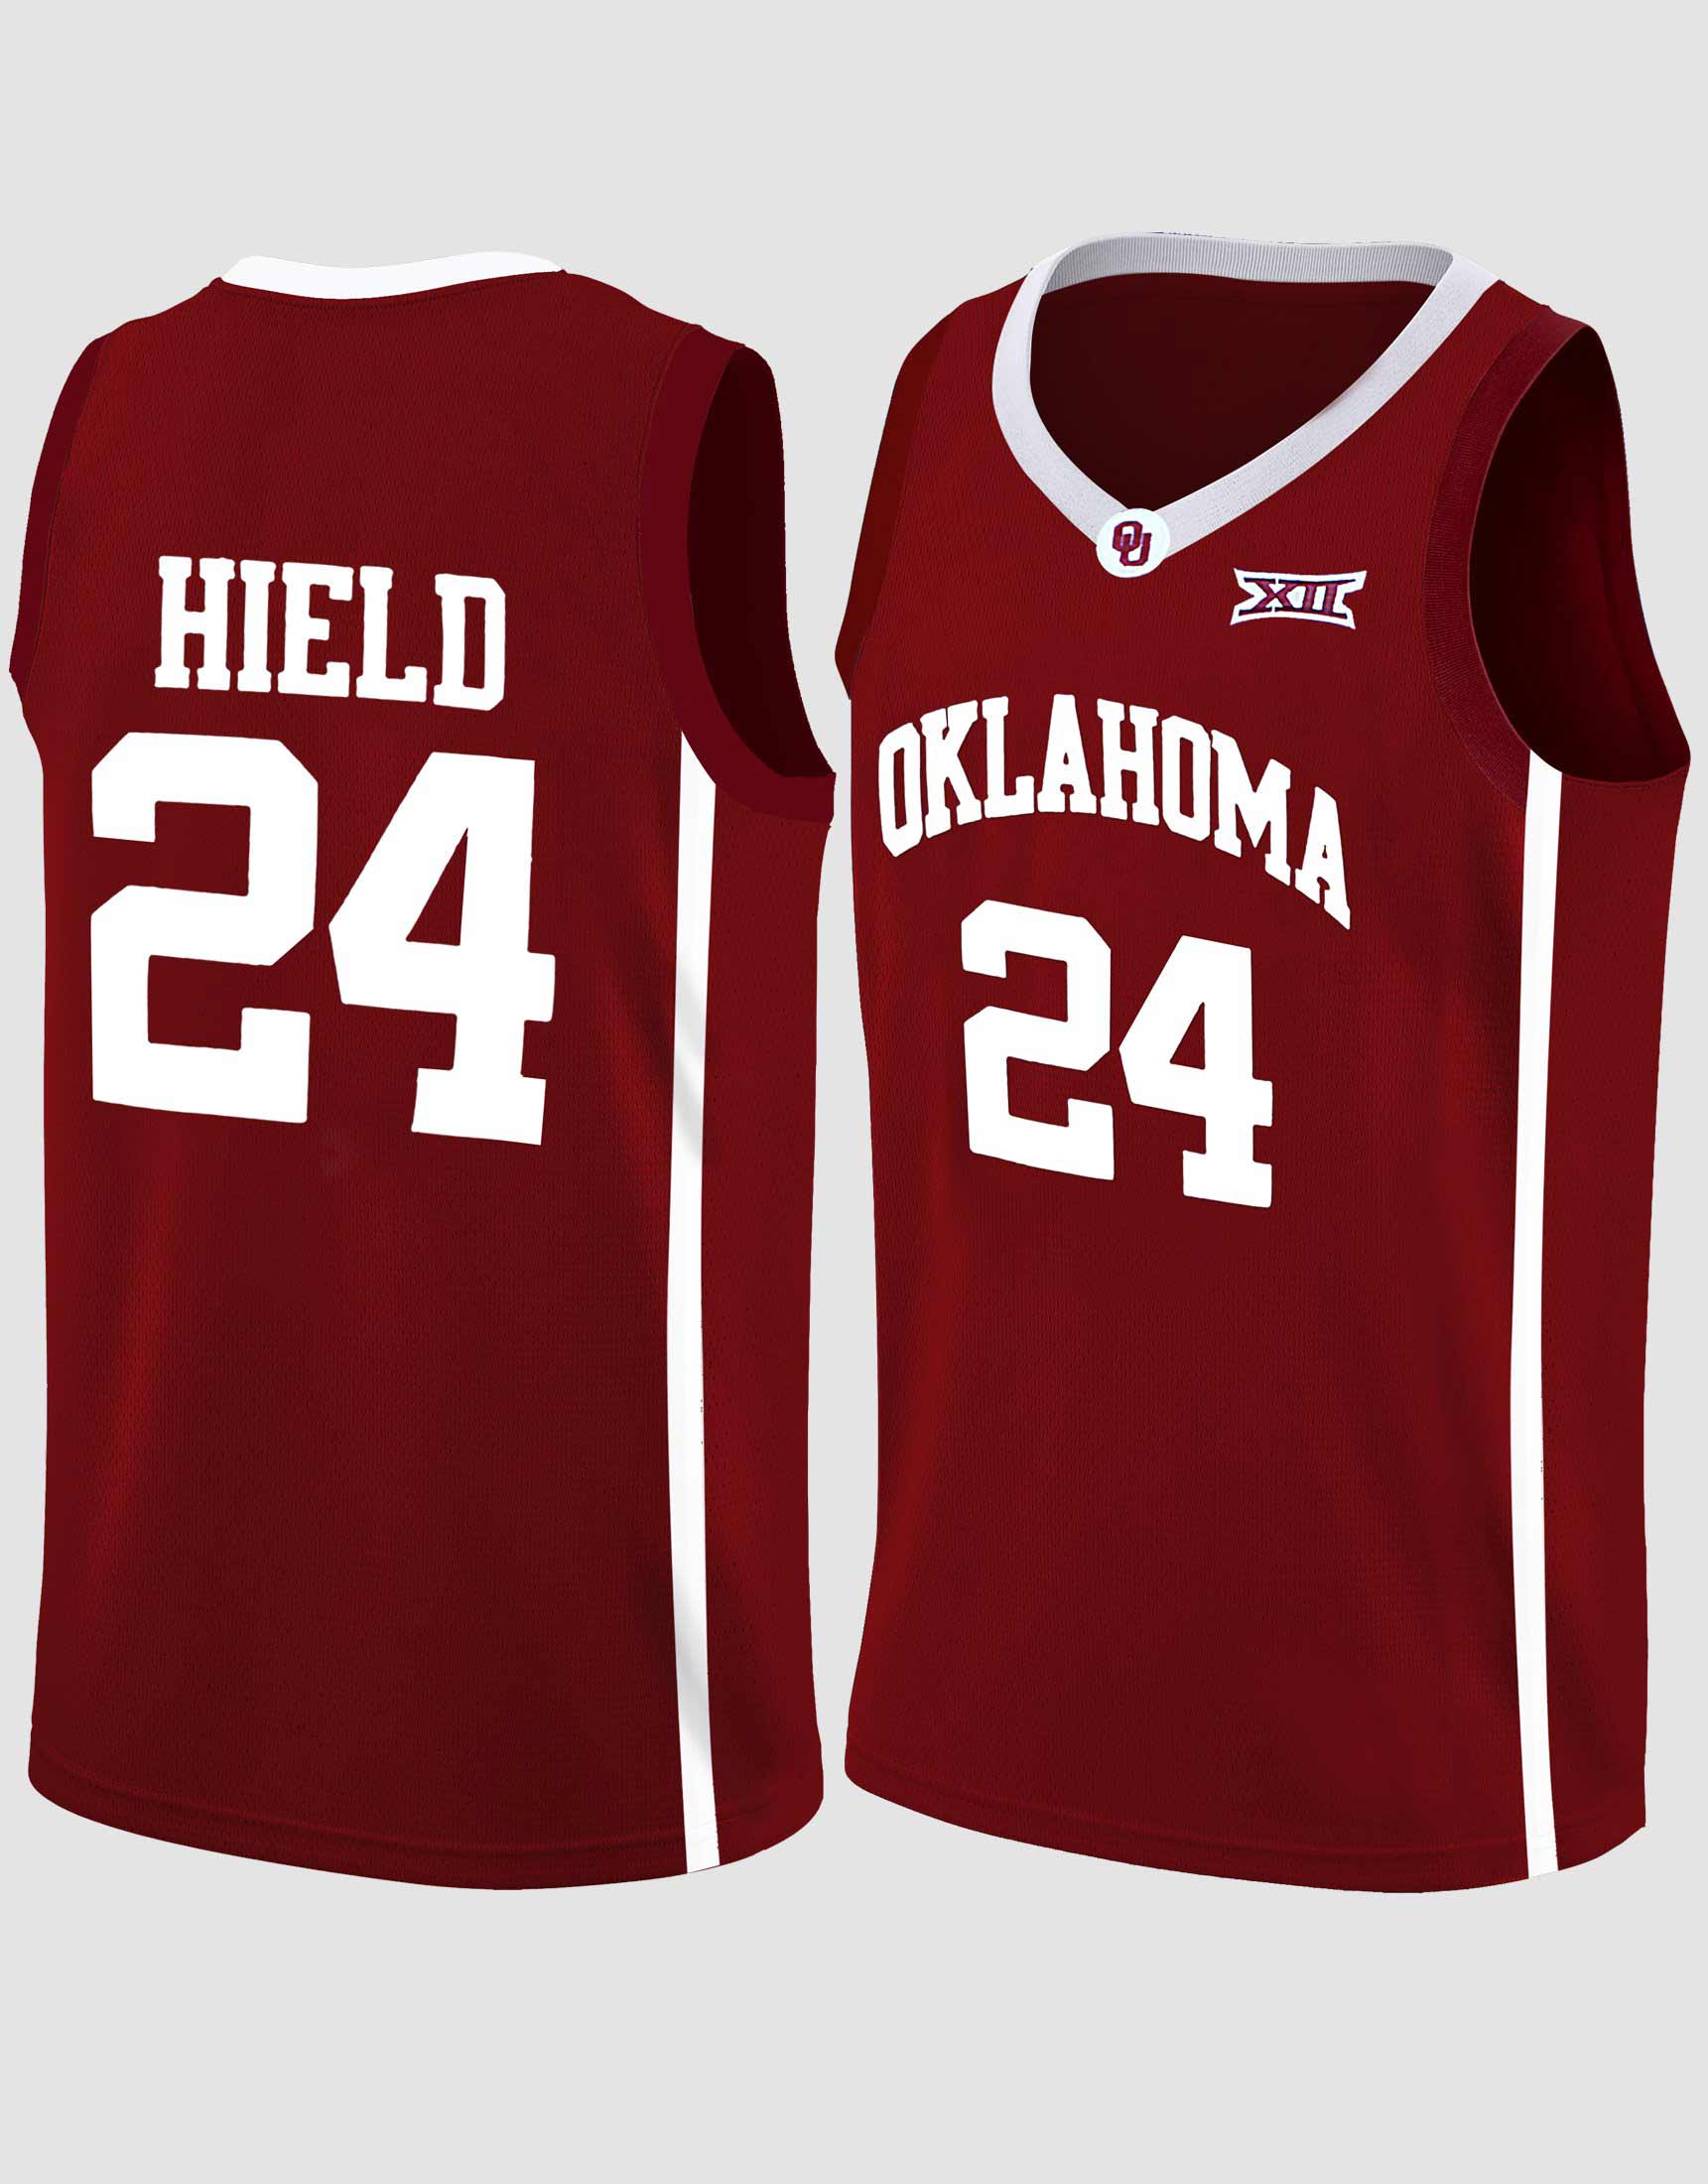 Buddy Hield Oklahoma Sooners College Basketball Throwback Jersey